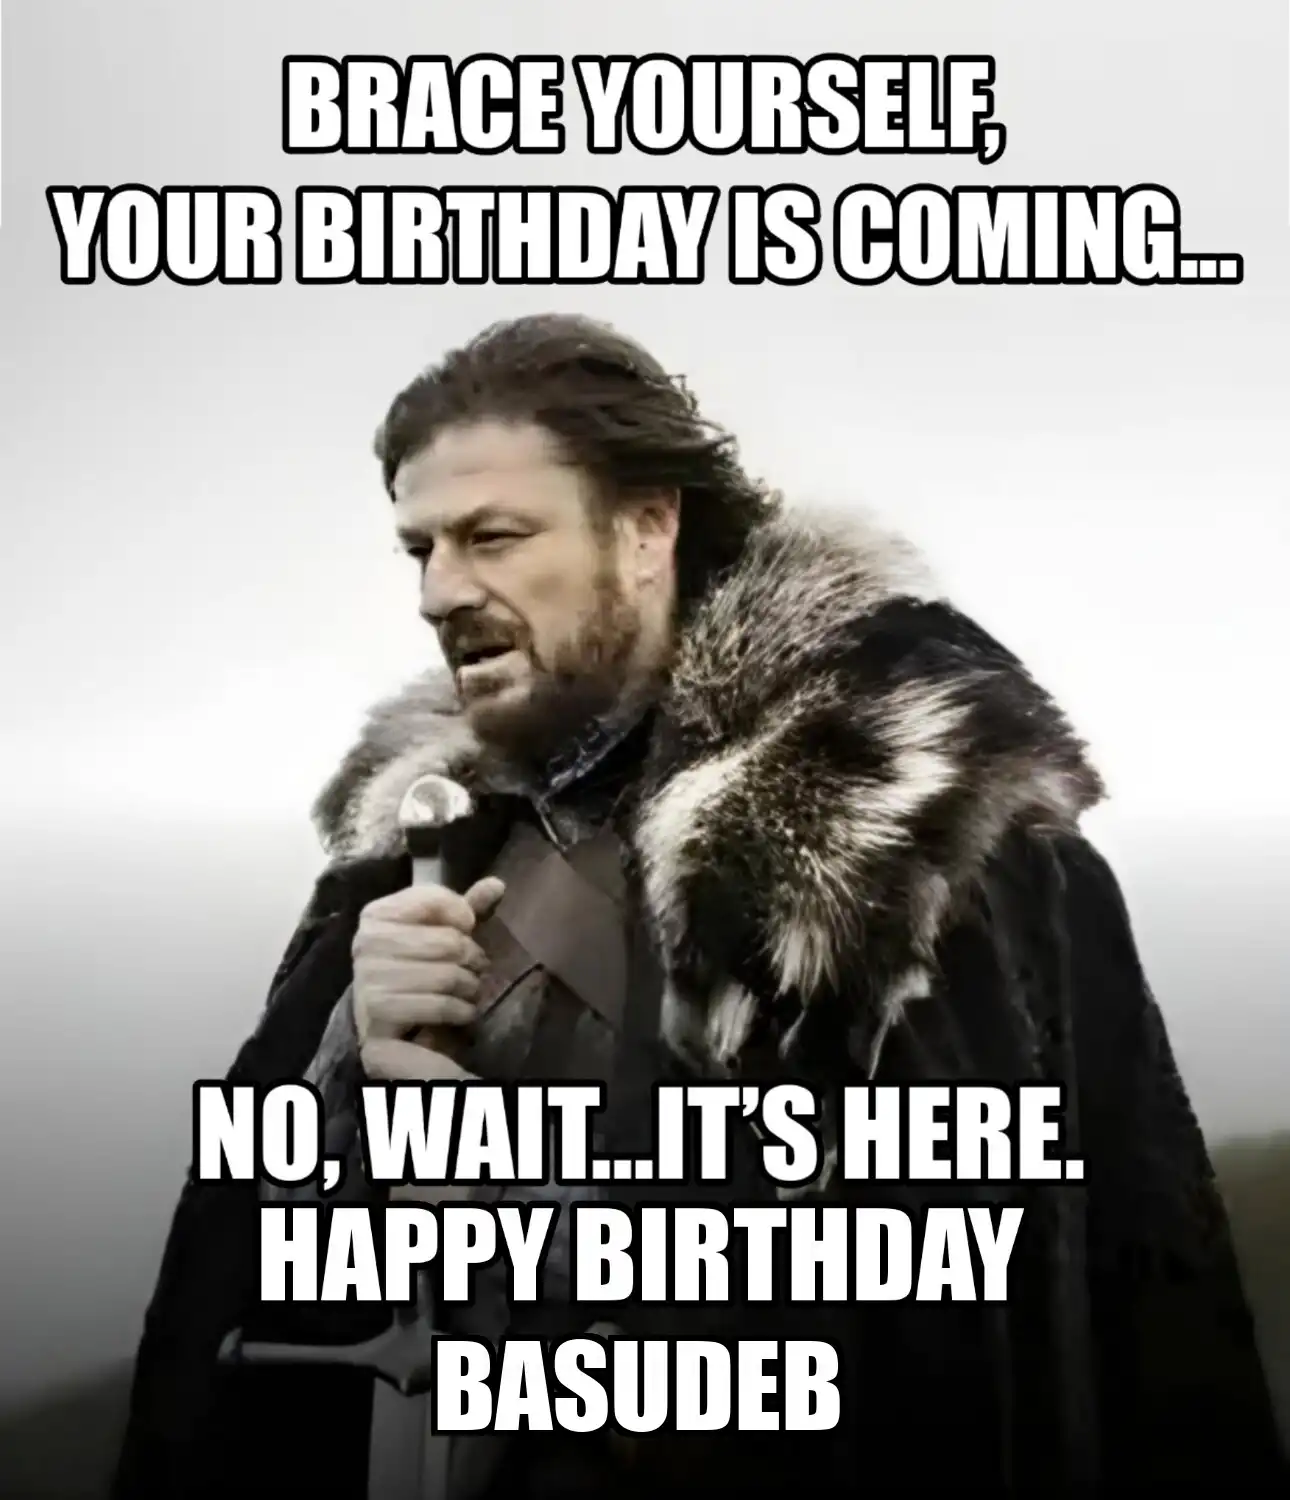 Happy Birthday Basudeb Brace Yourself Your Birthday Is Coming Meme